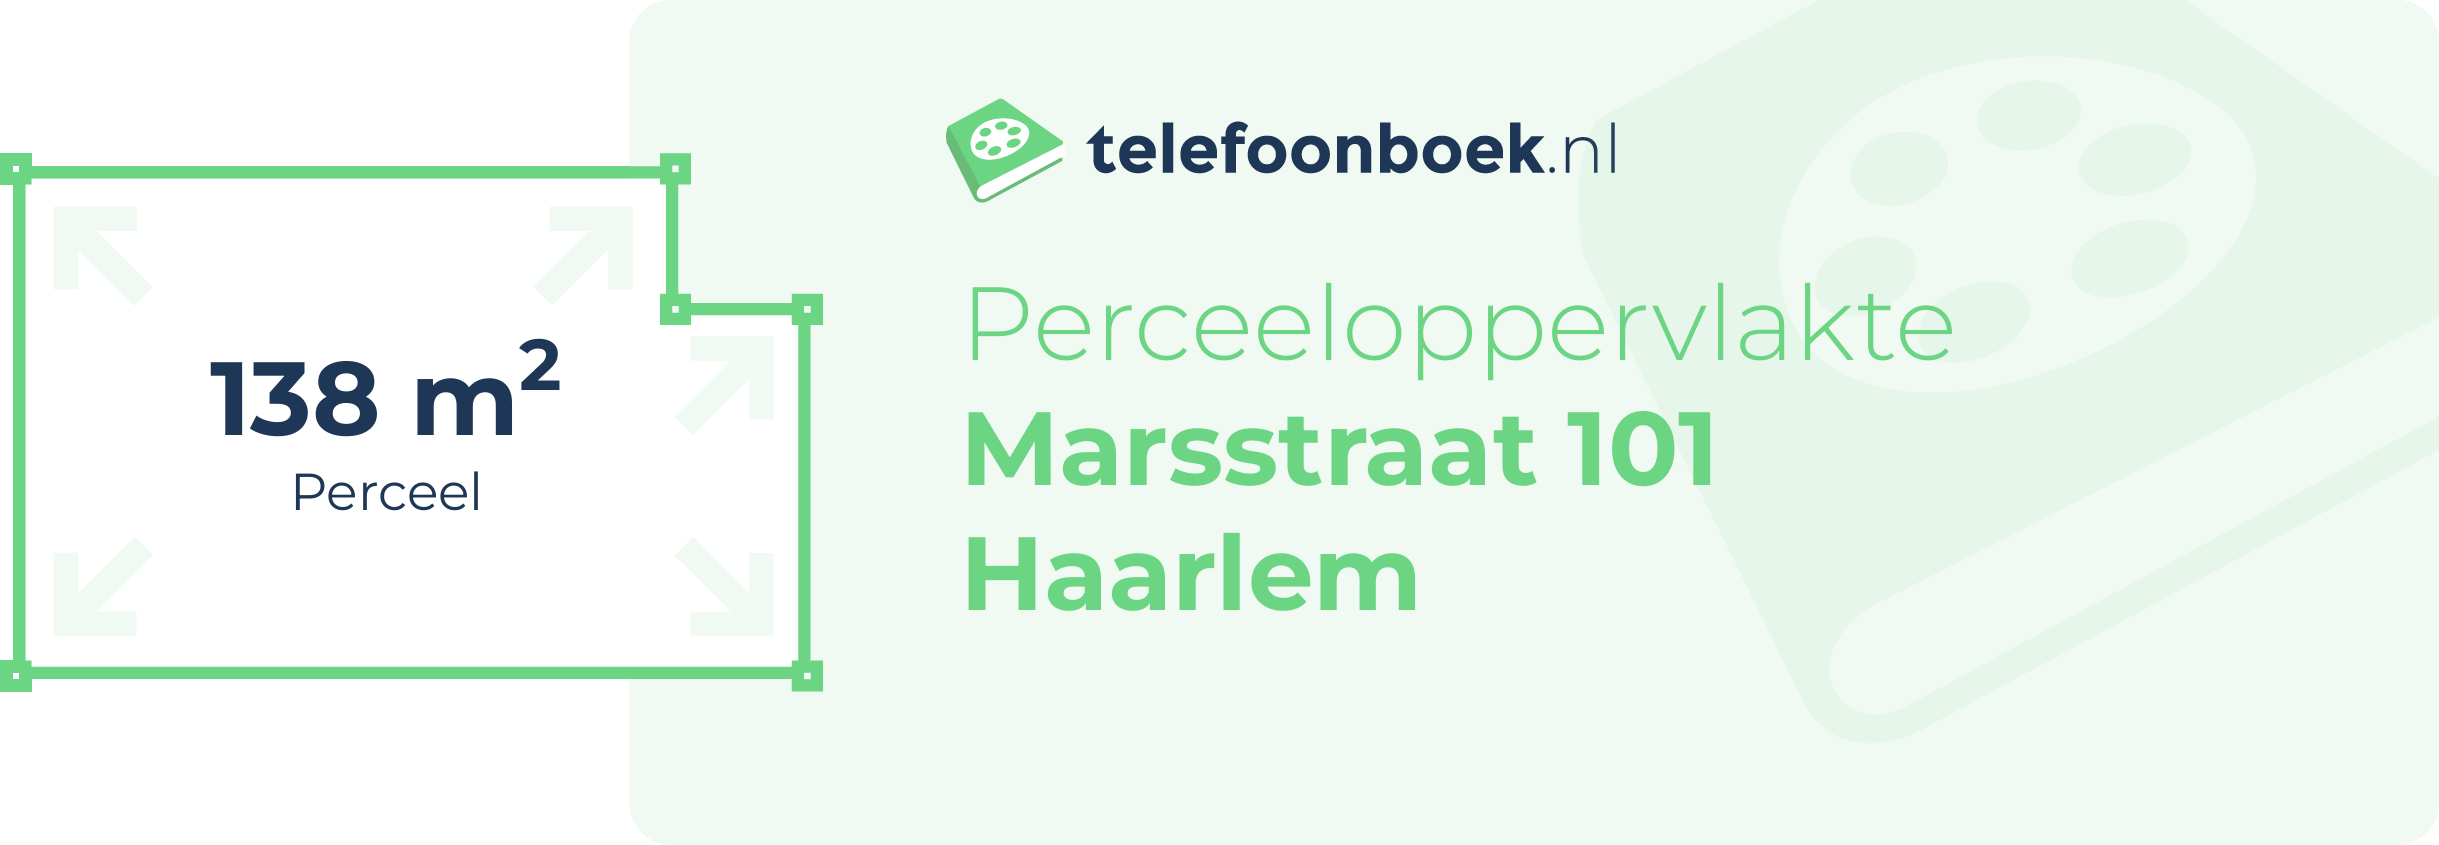 Perceeloppervlakte Marsstraat 101 Haarlem